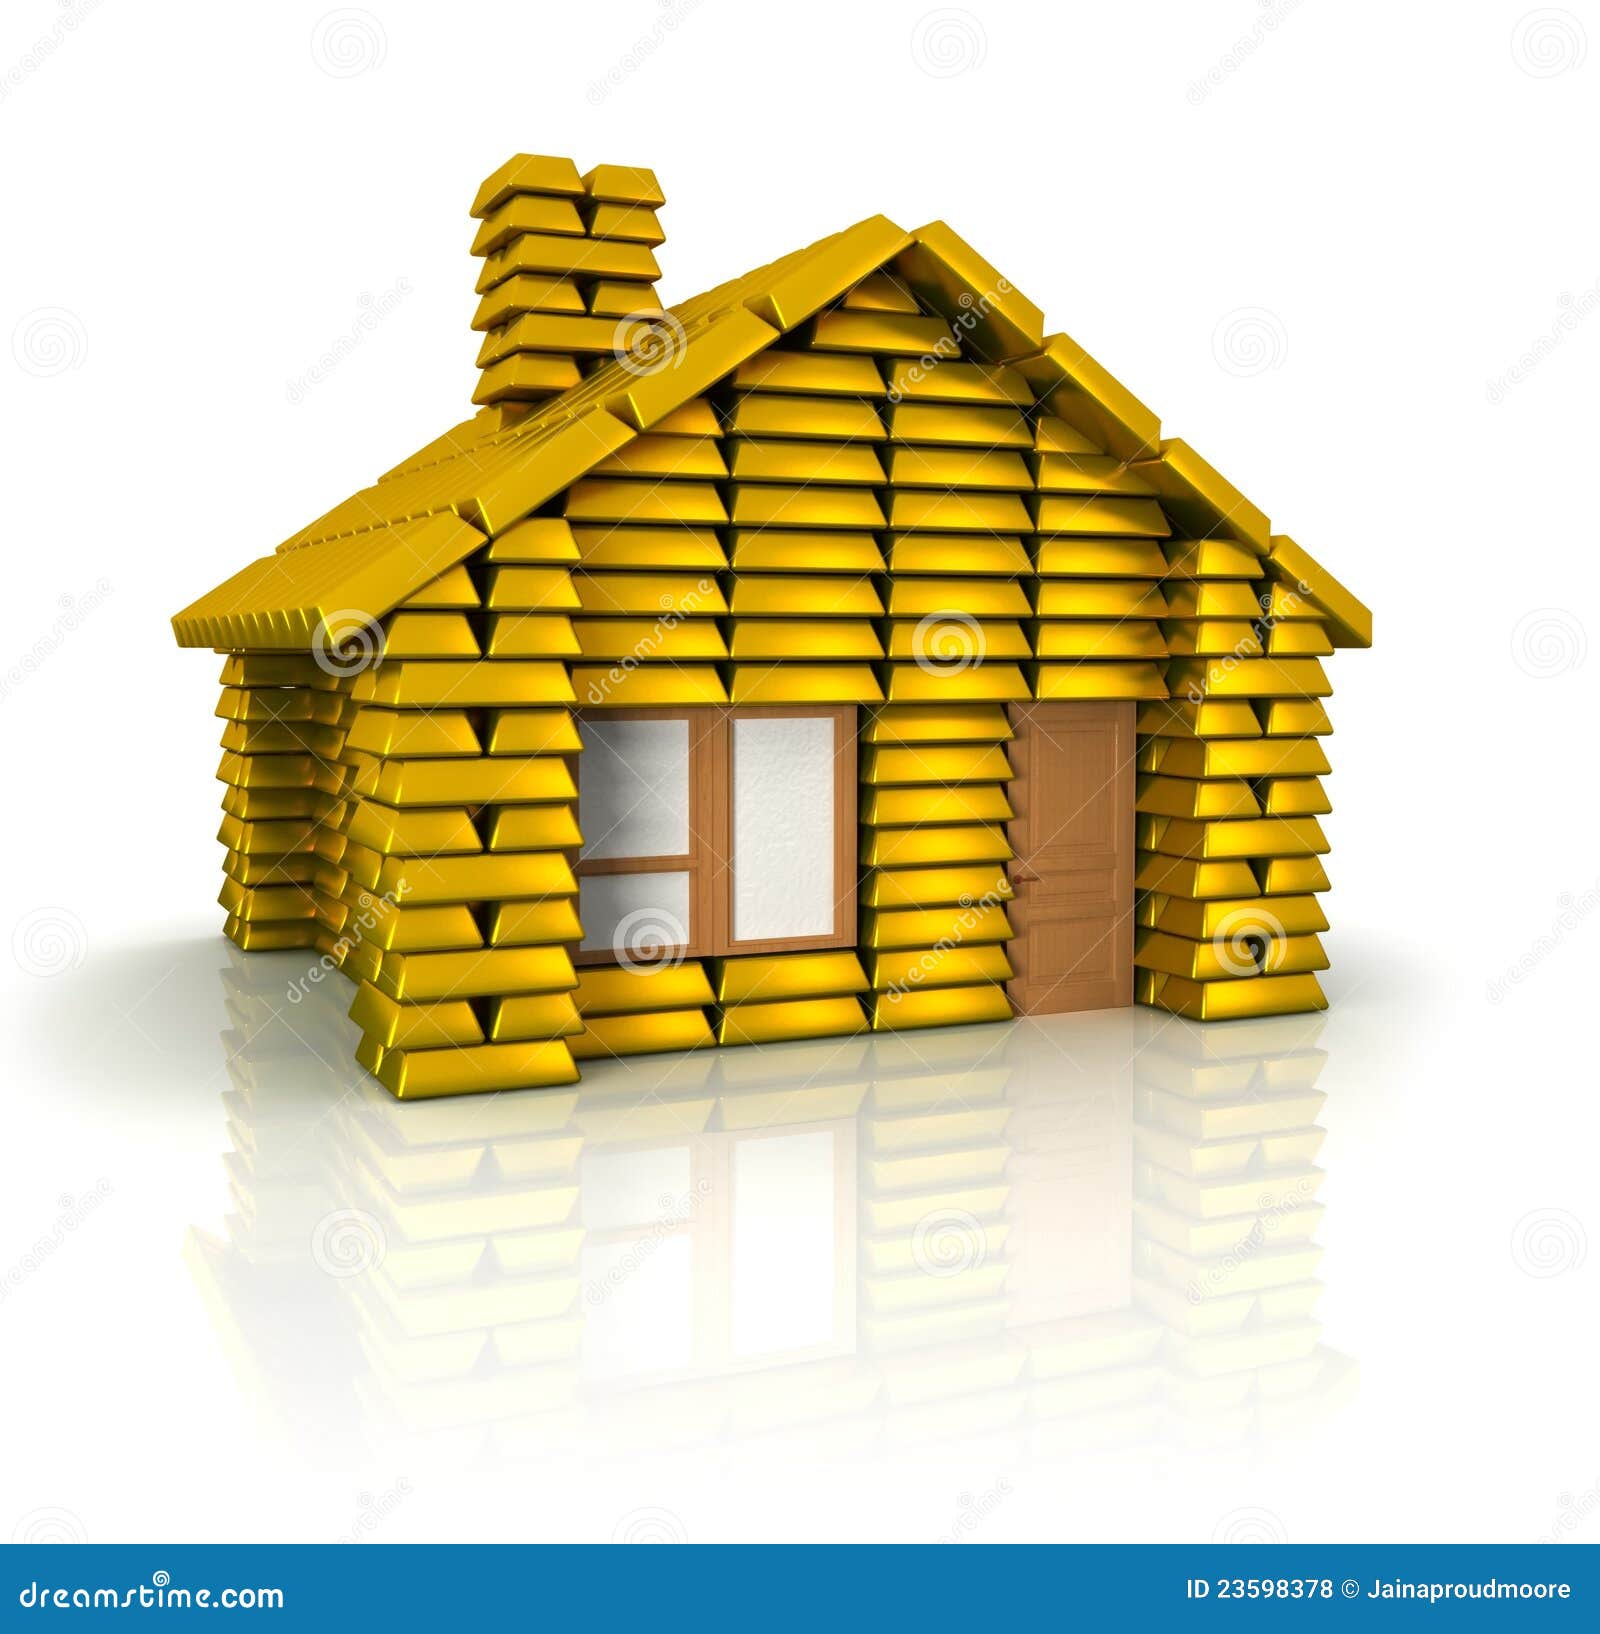 house gold bullion 23598378